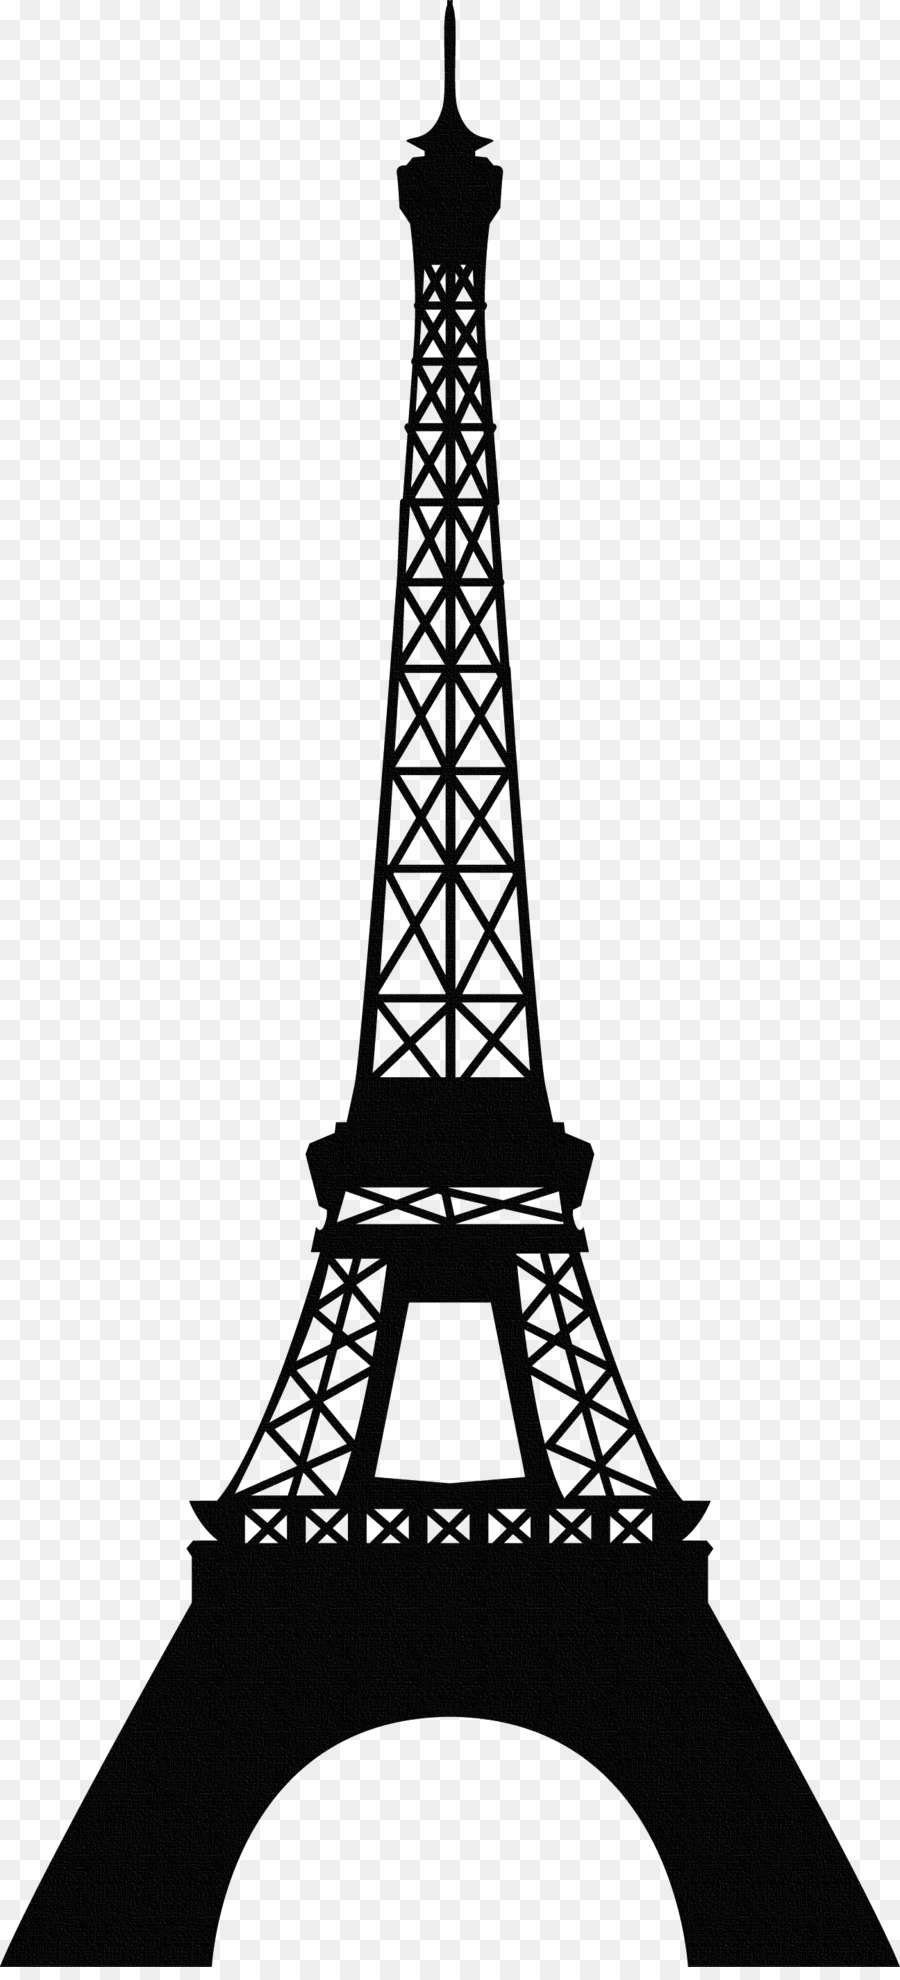 Eiffel Tower Wall decal Clip art - Paris png download - 1296*2832 - Free Transparent Eiffel Tower png Download.